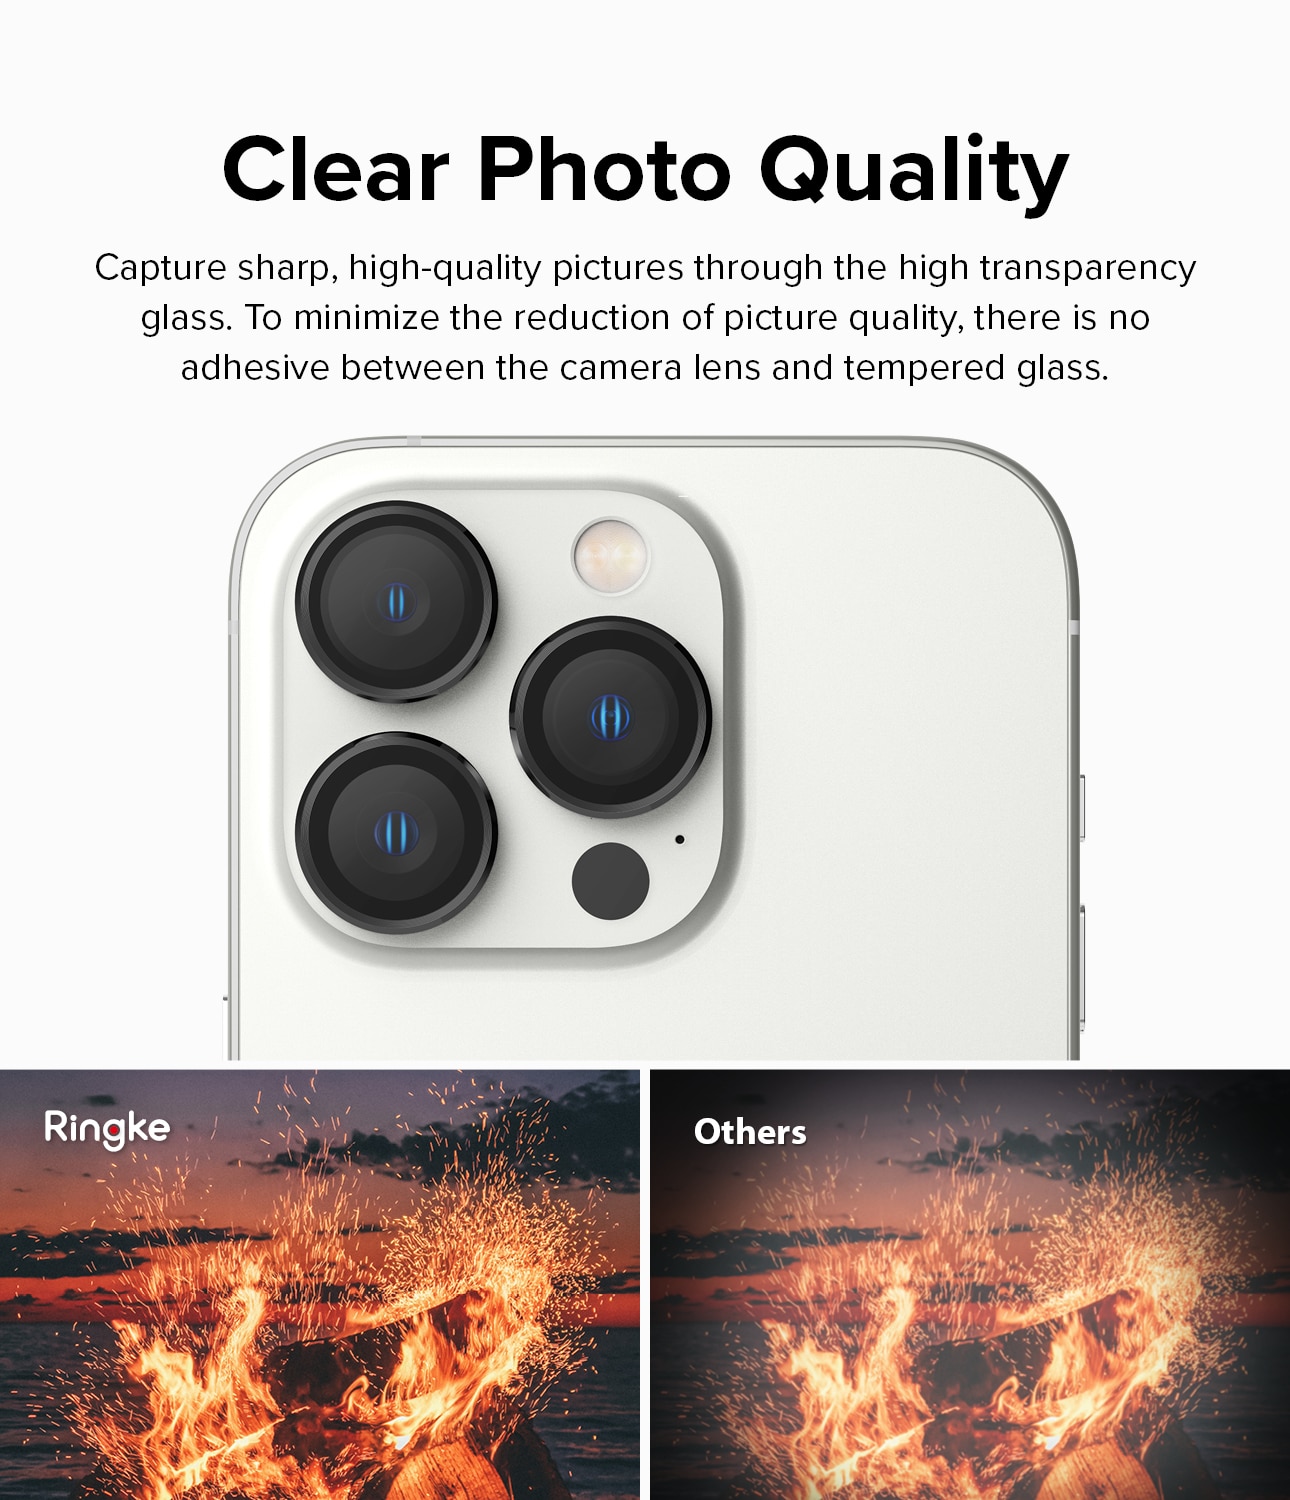 iPhone 14 Pro Max Camera Lens Frame Glass Black